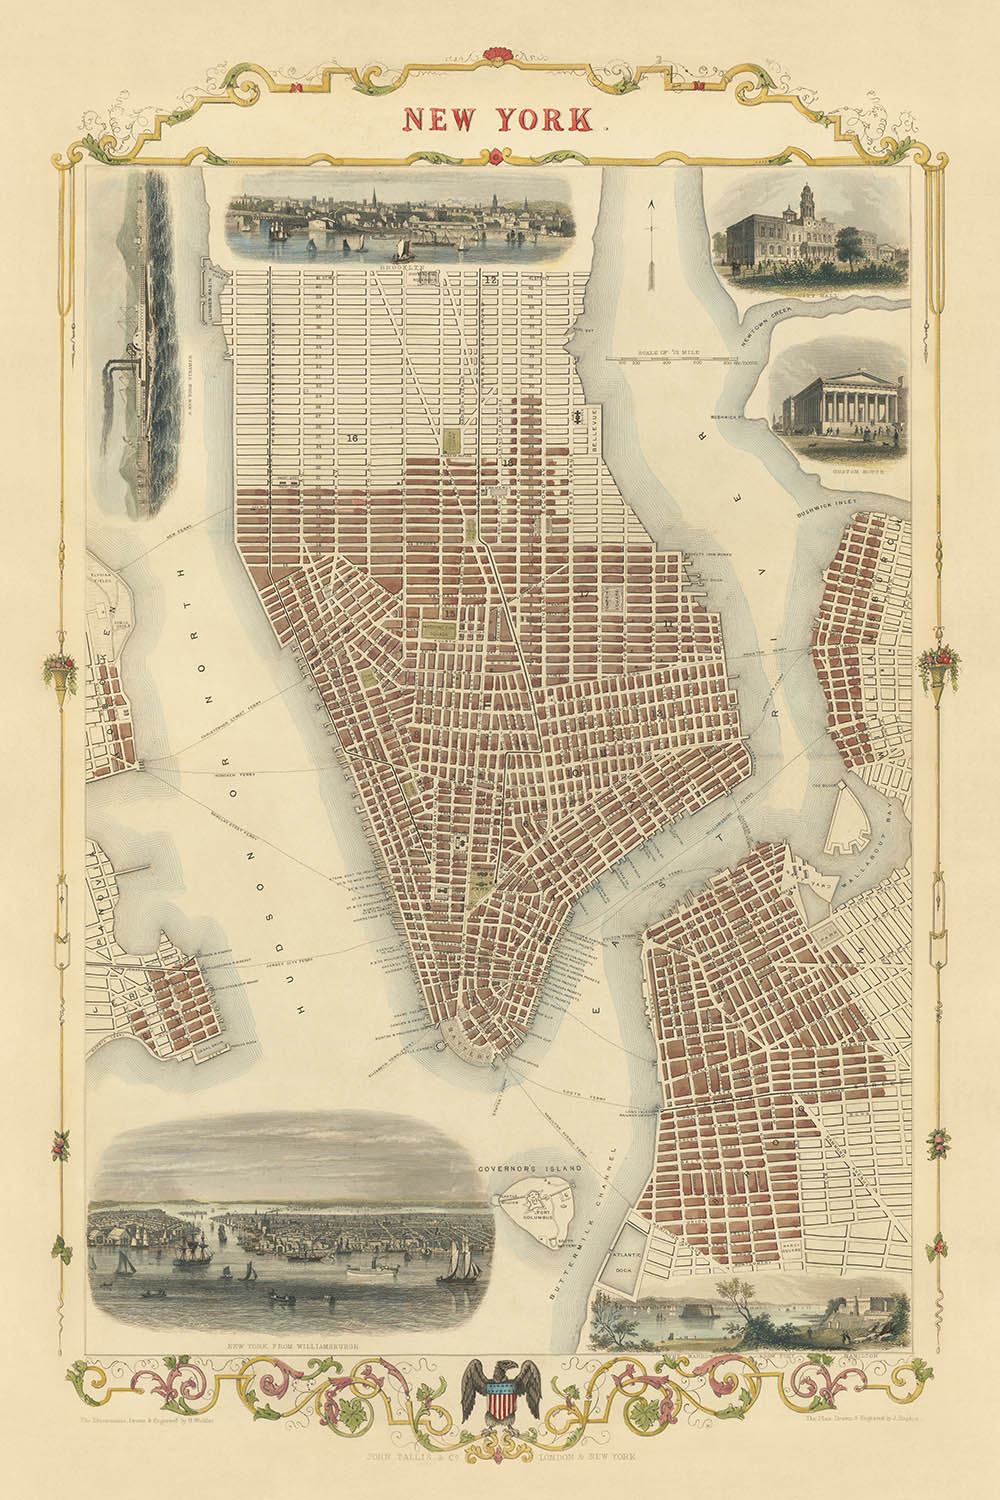 Old Map of New York City by Tallis & Rapkin, 1851: Manhattan, Brooklyn, Williamsburgh, City Hall, Custom's House